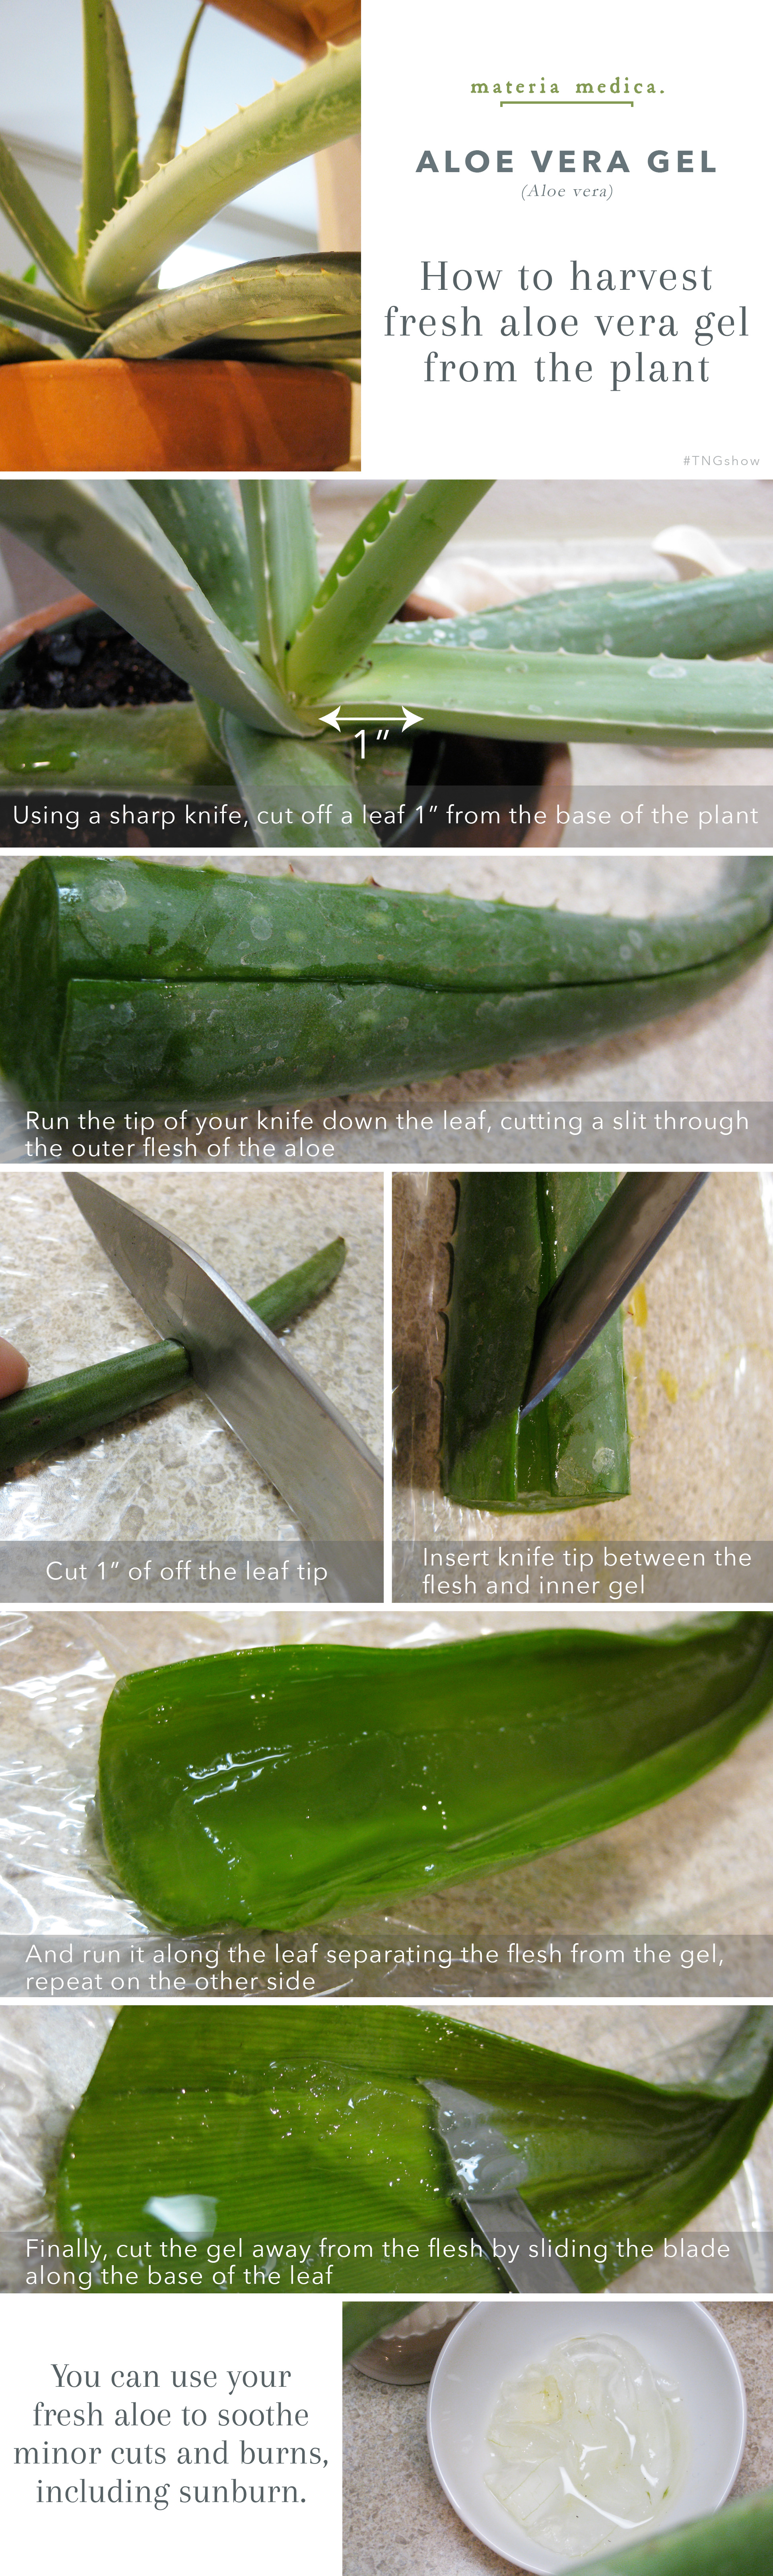 How to Harvest Fresh Aloe Vera Gel from katienormalgirl.com